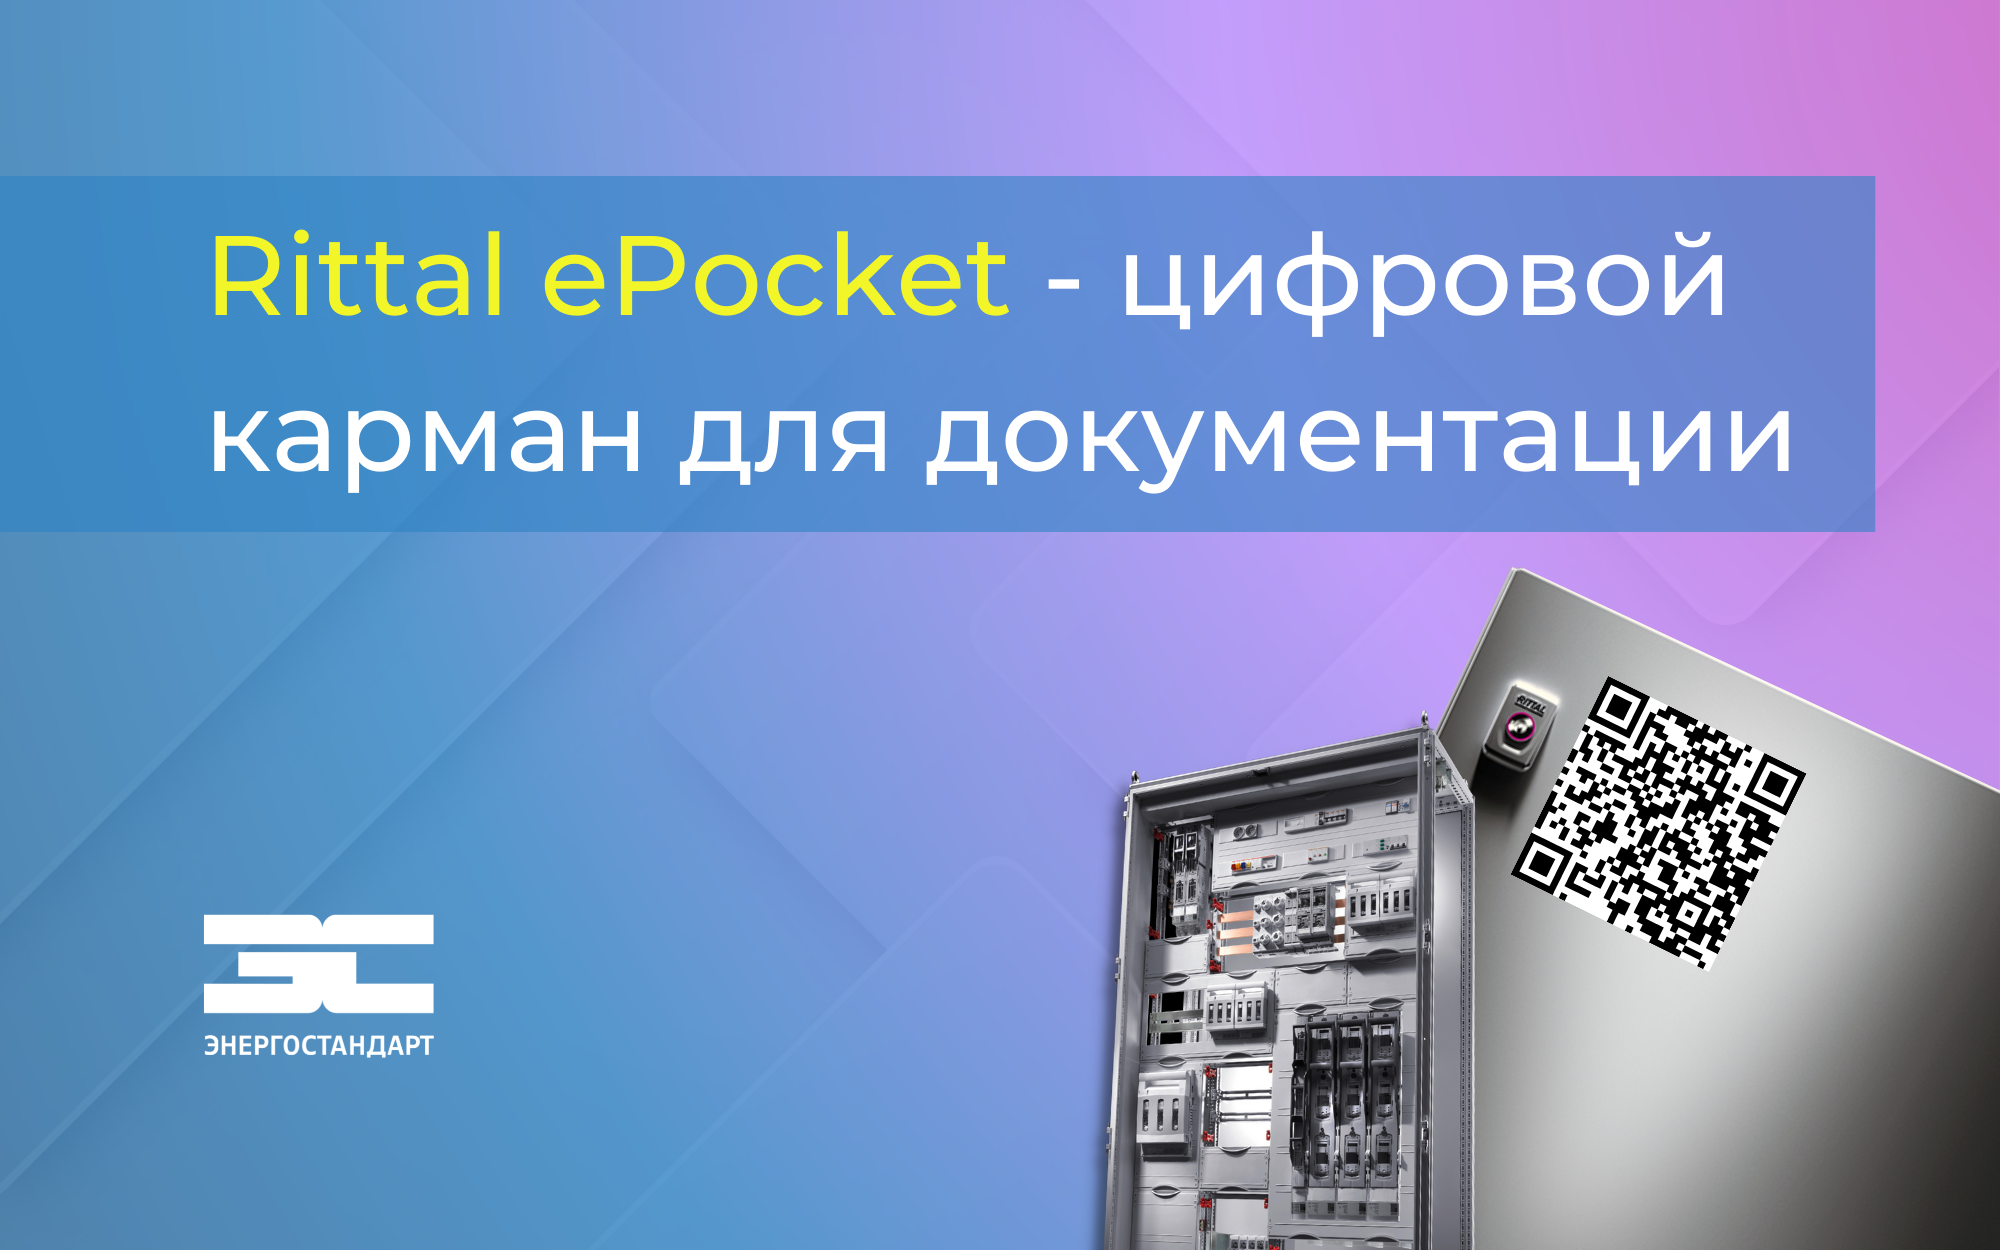 Rittal ePocket - цифровой карман для документации. <